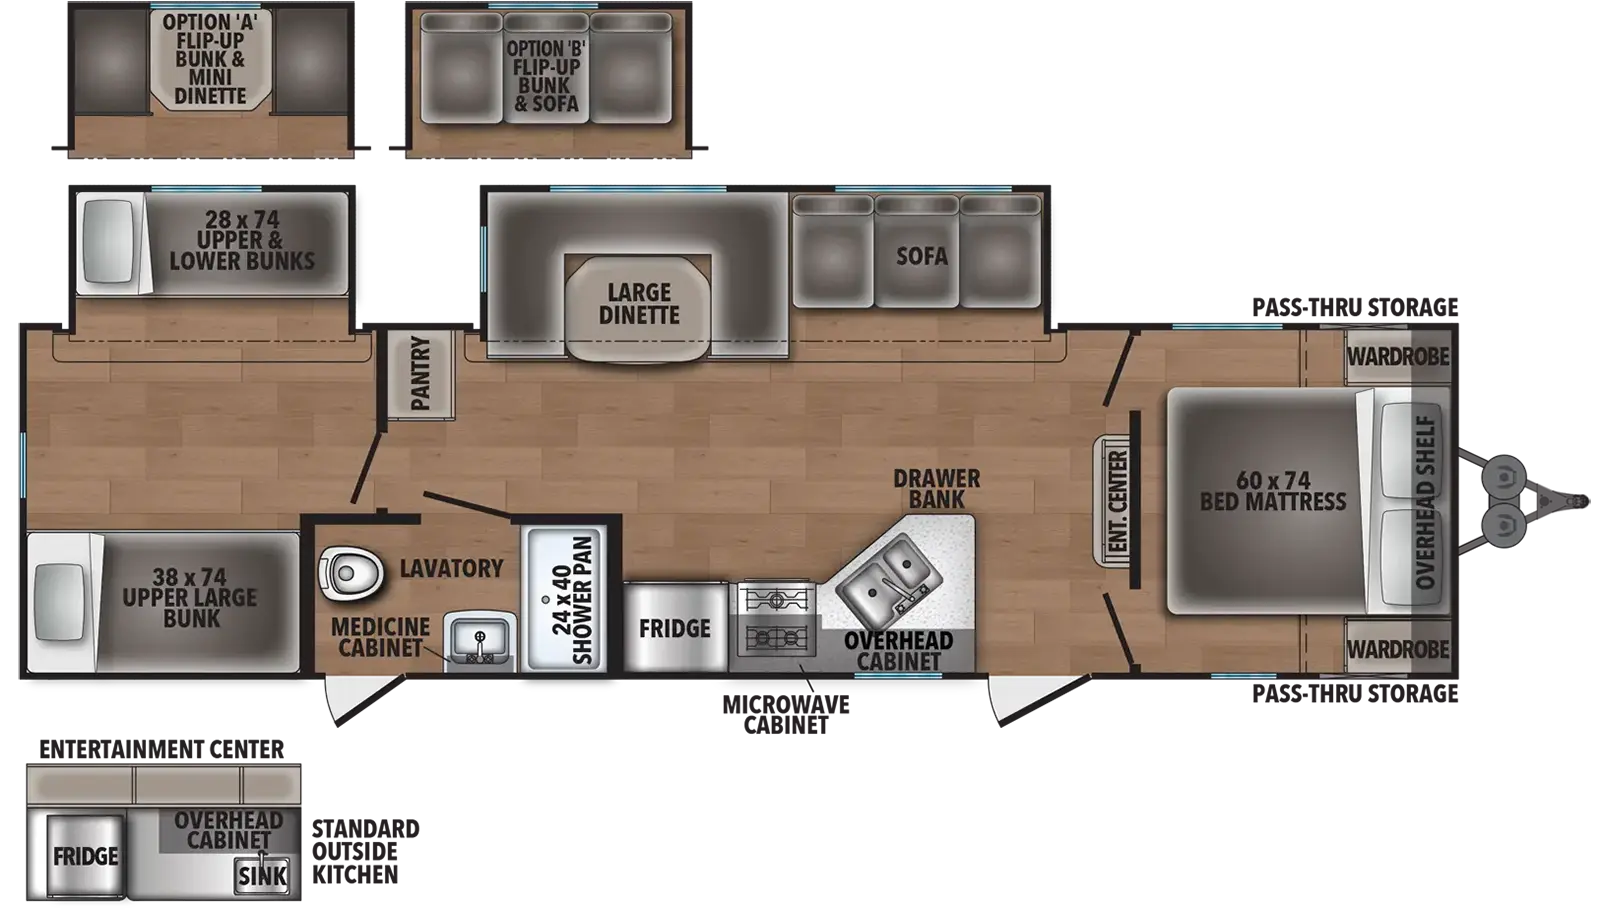 32DS Floorplan Image